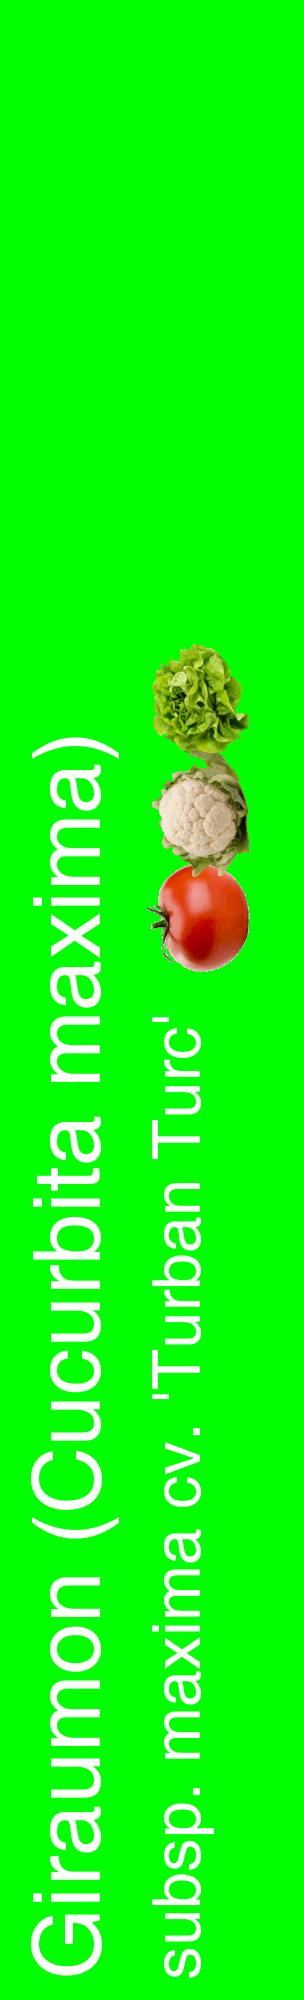 Étiquette de : Cucurbita maxima subsp. maxima cv. 'Turban Turc' - format c - style blanche16_basiquehel avec comestibilité simplifiée